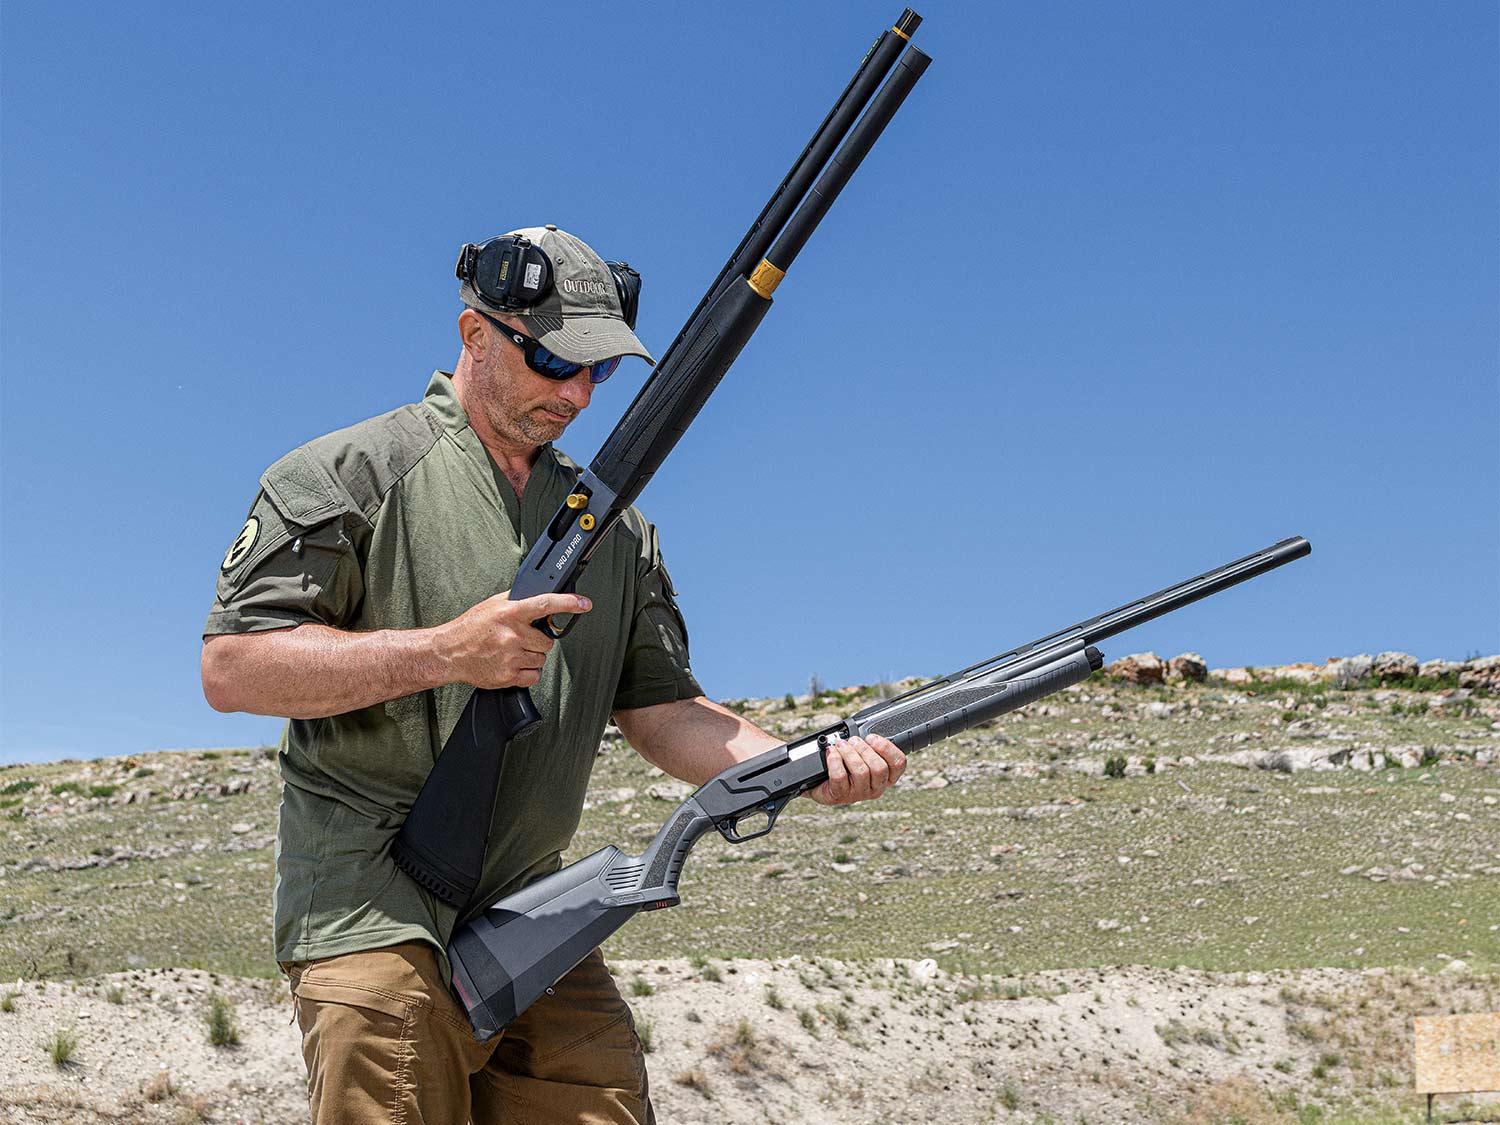 A man holding up two shotguns at a shooting range.